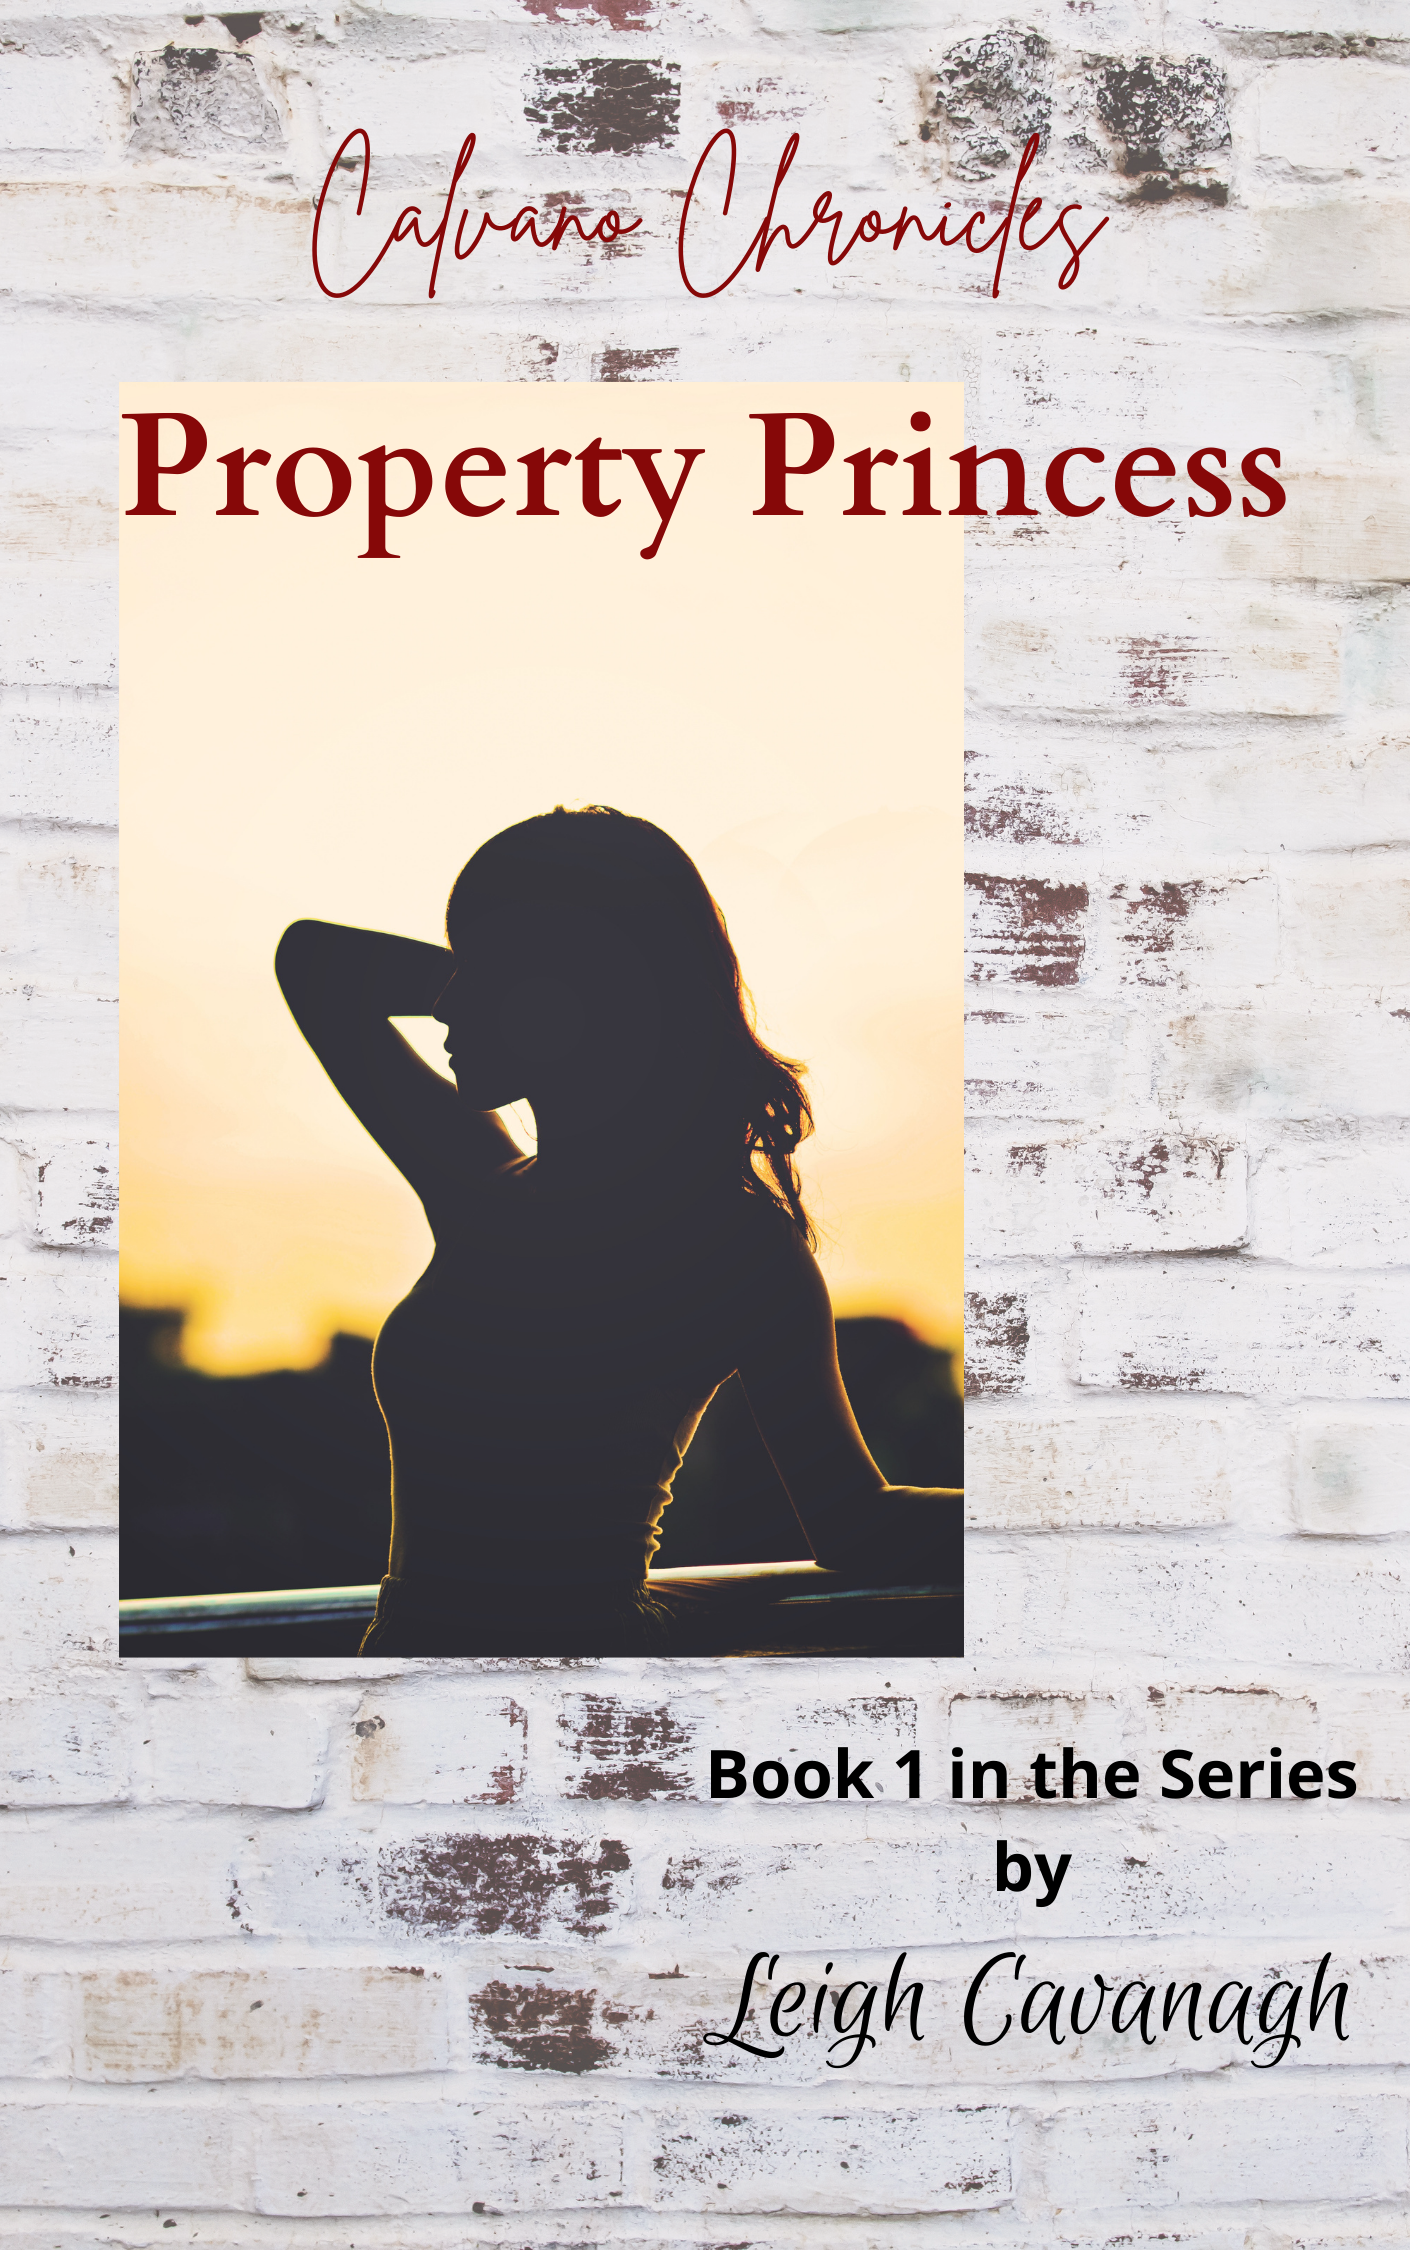 FREE: Calvano Chronicles: Property Princess by Leigh Cavanagh